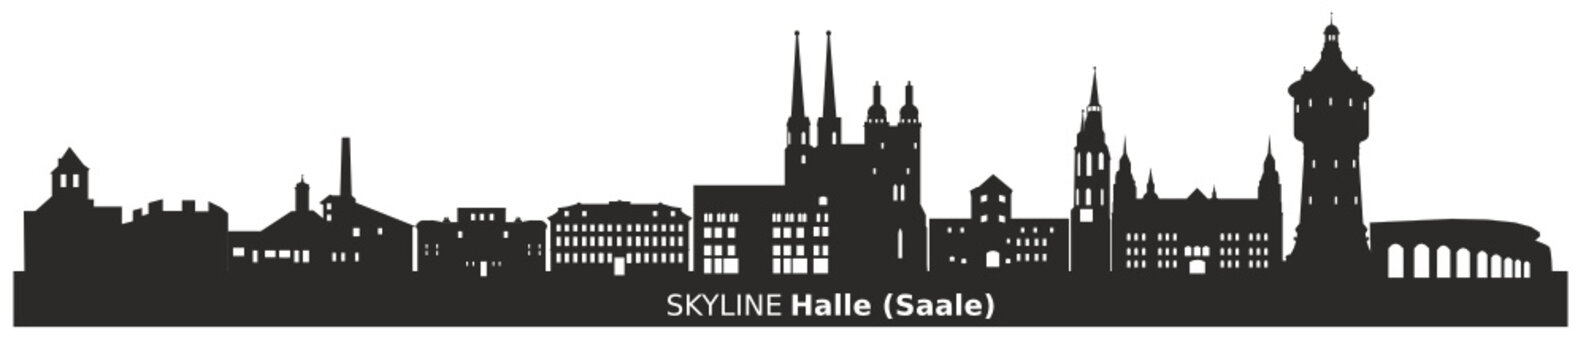 Skyline Halle (Saale) © Instantly